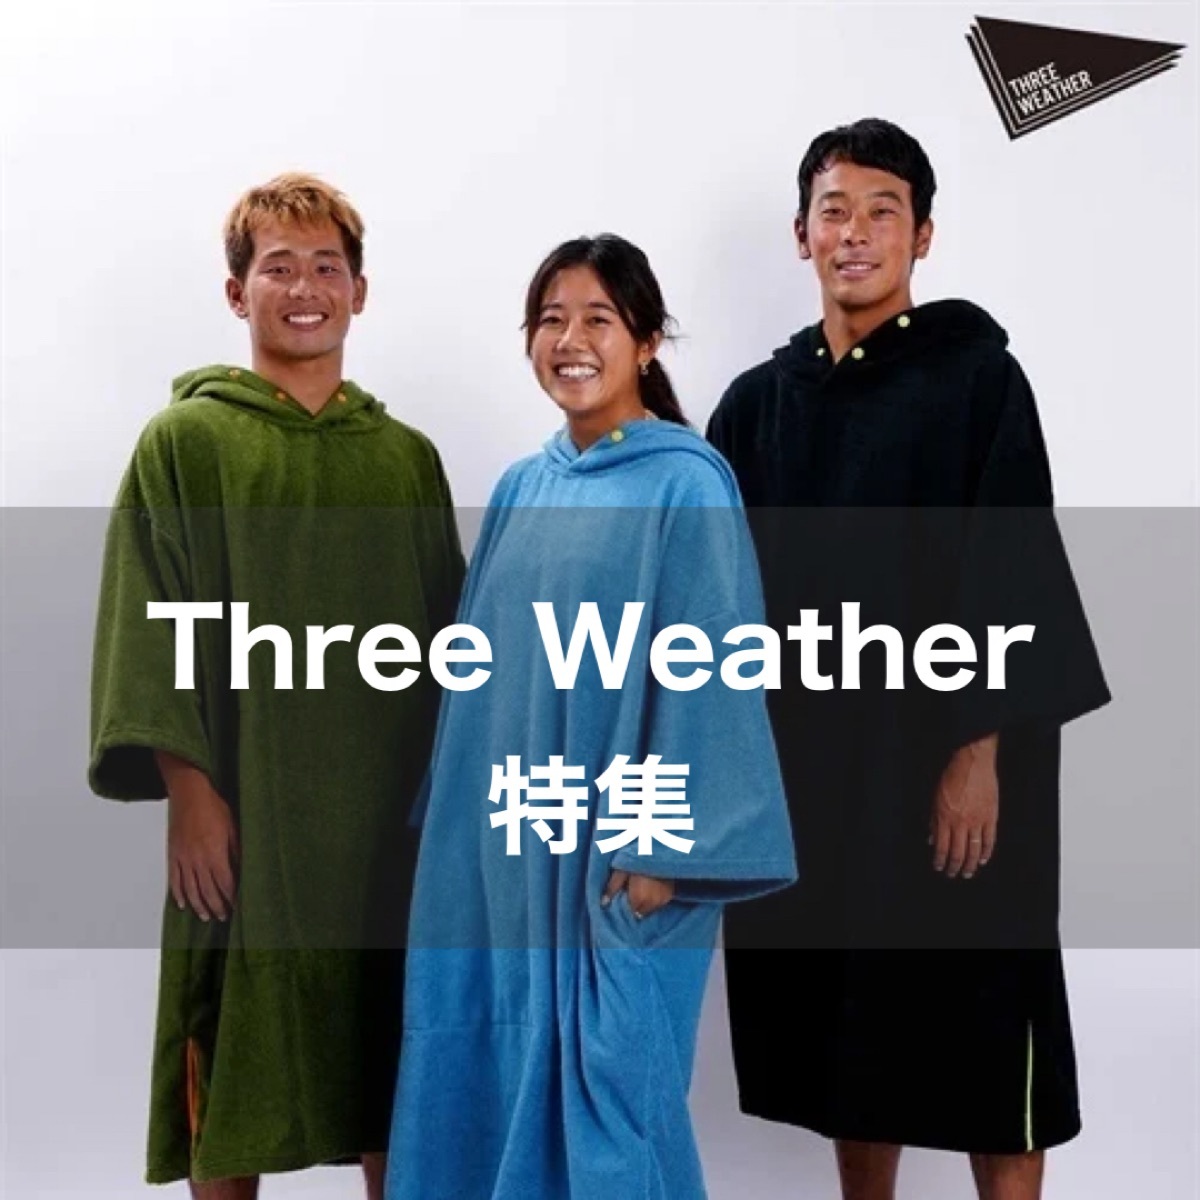 Three Weather サーフィンアクセサリー特集